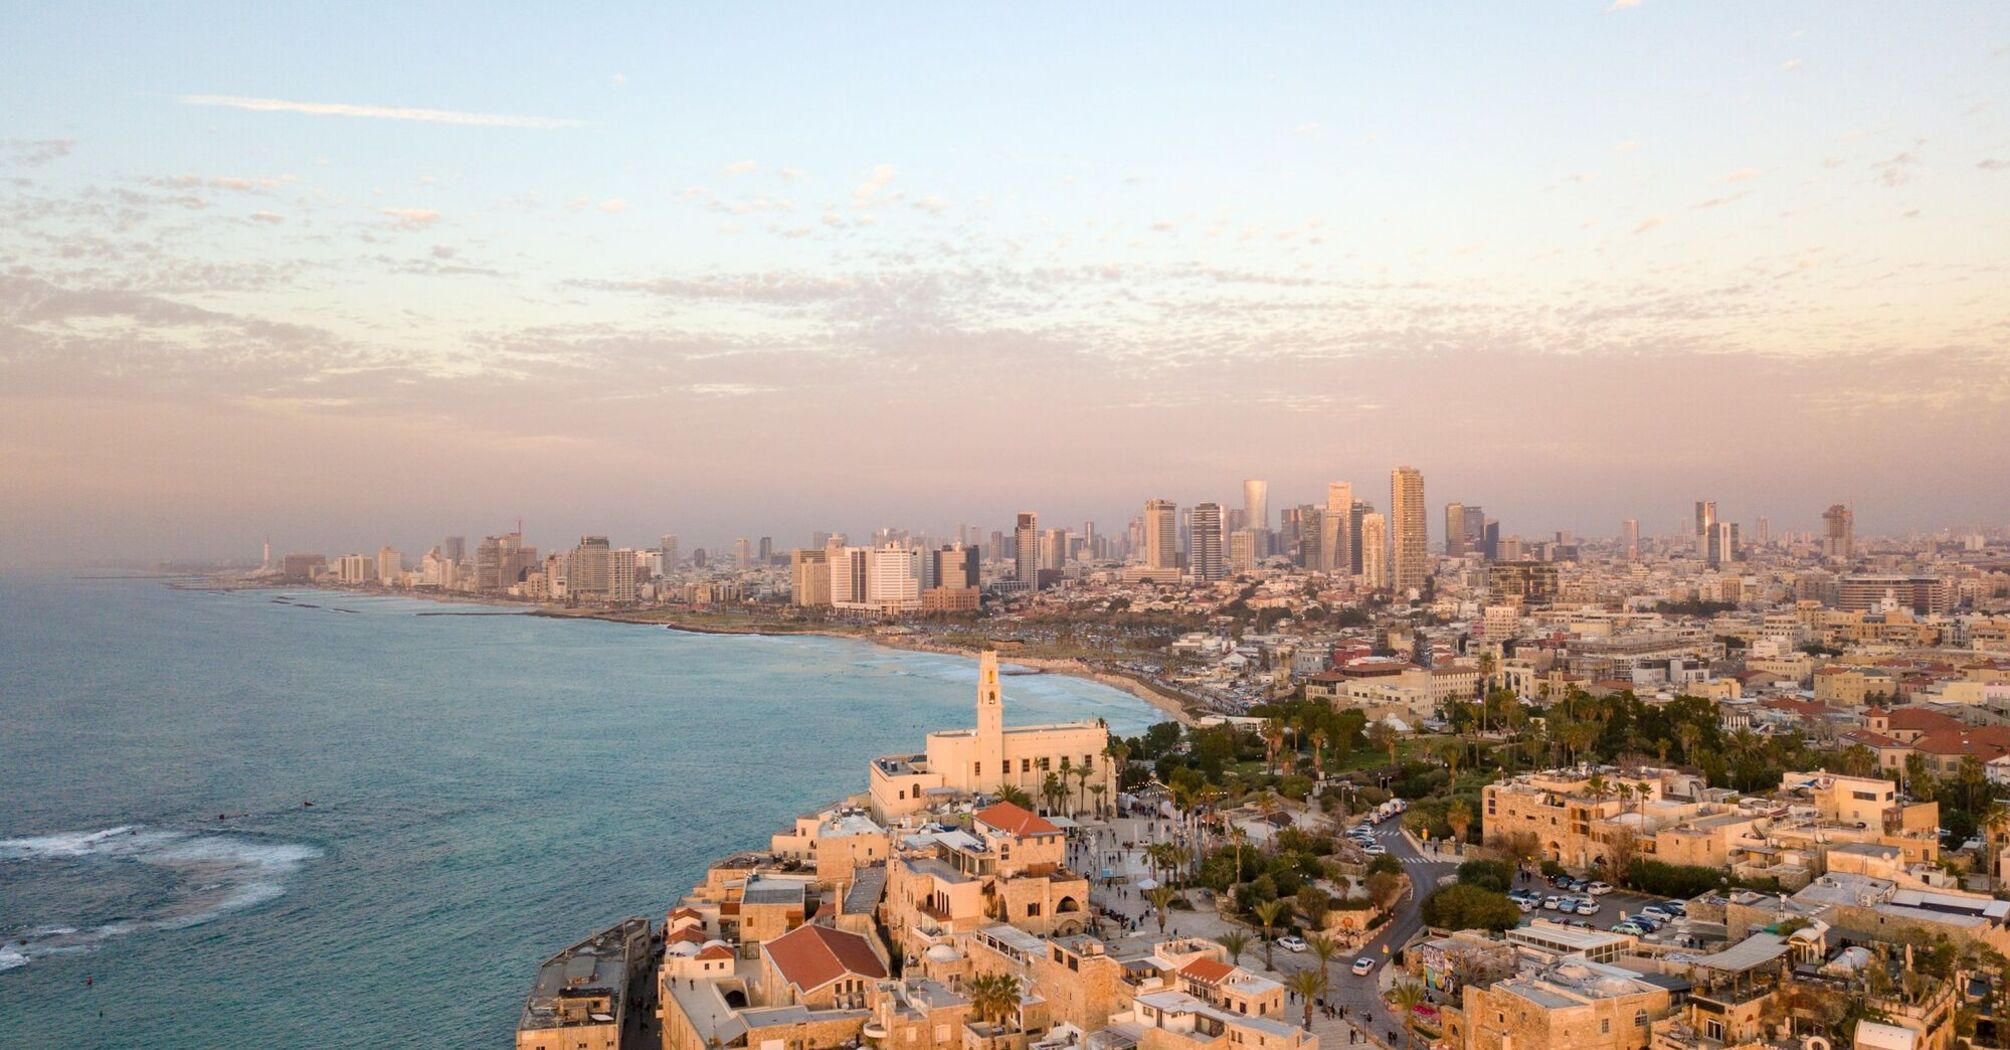 Aerial view of Tel Aviv's coastline at sunset